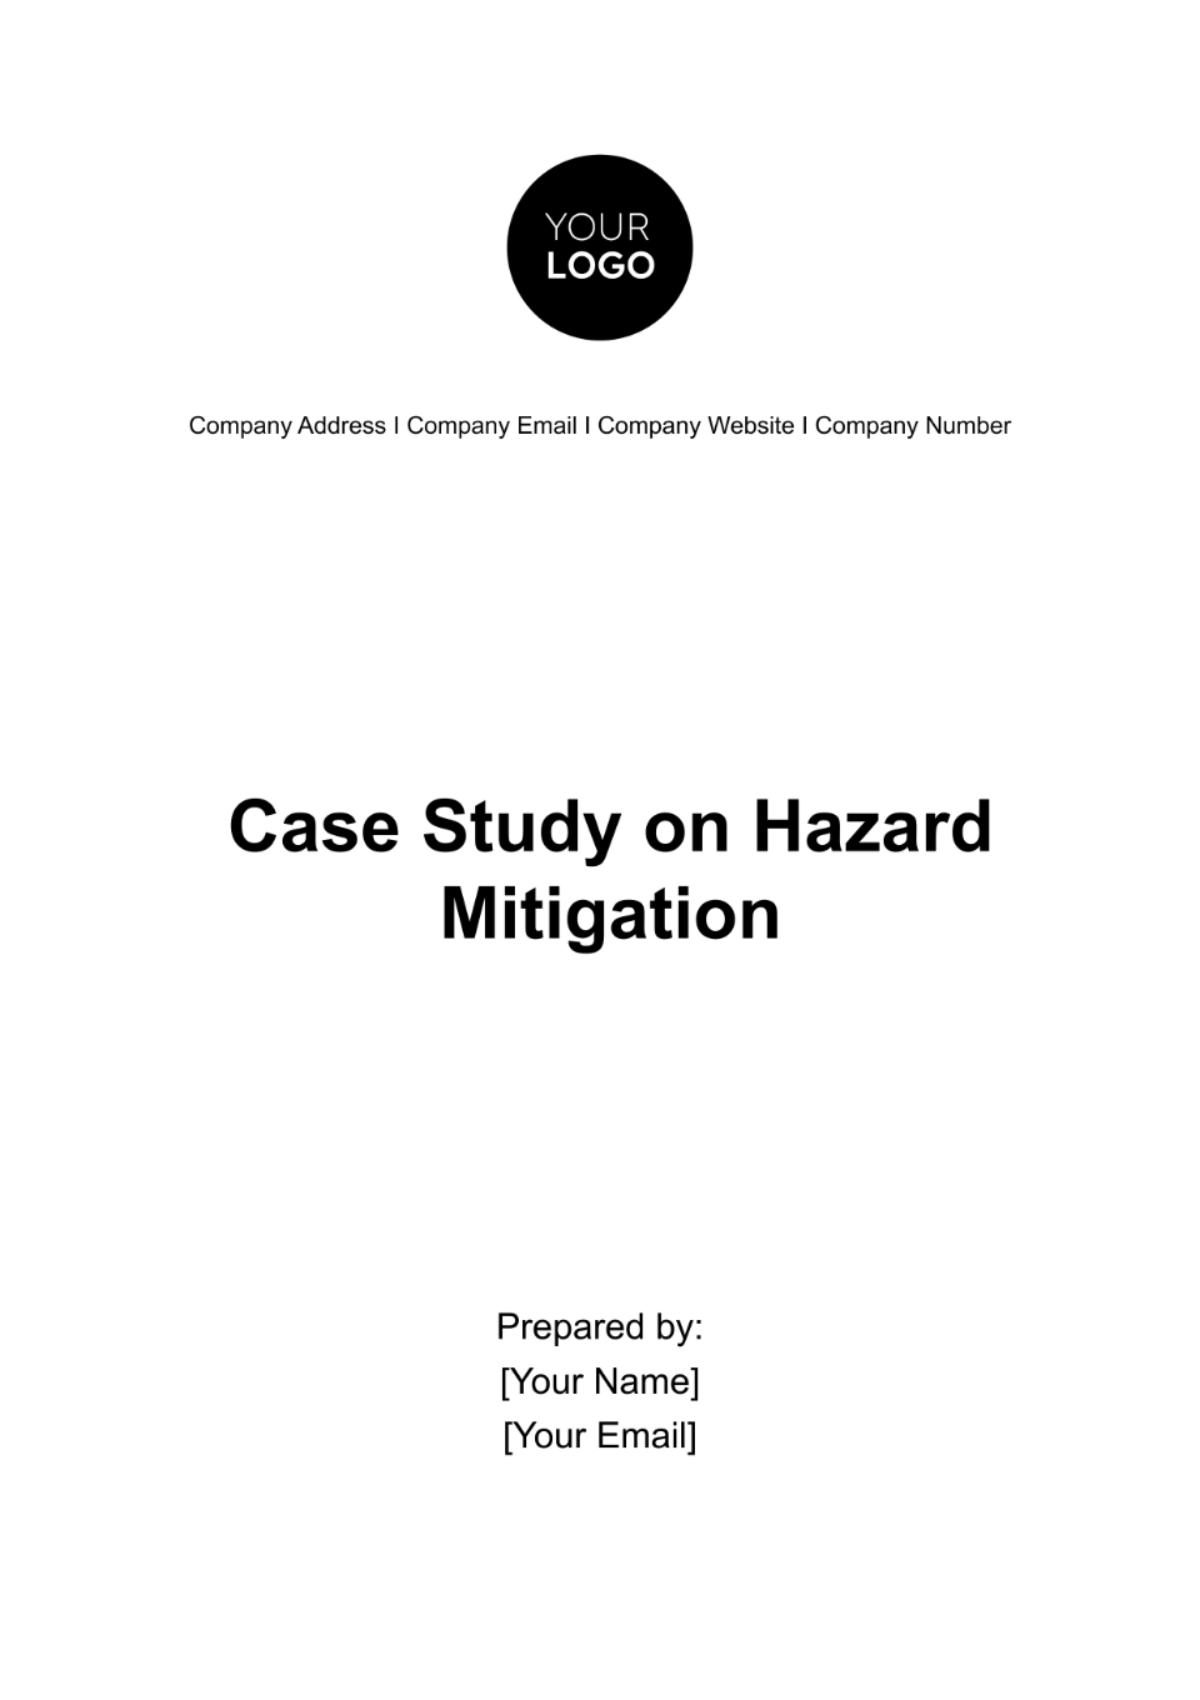 Free Case Study on Hazard Mitigation Template